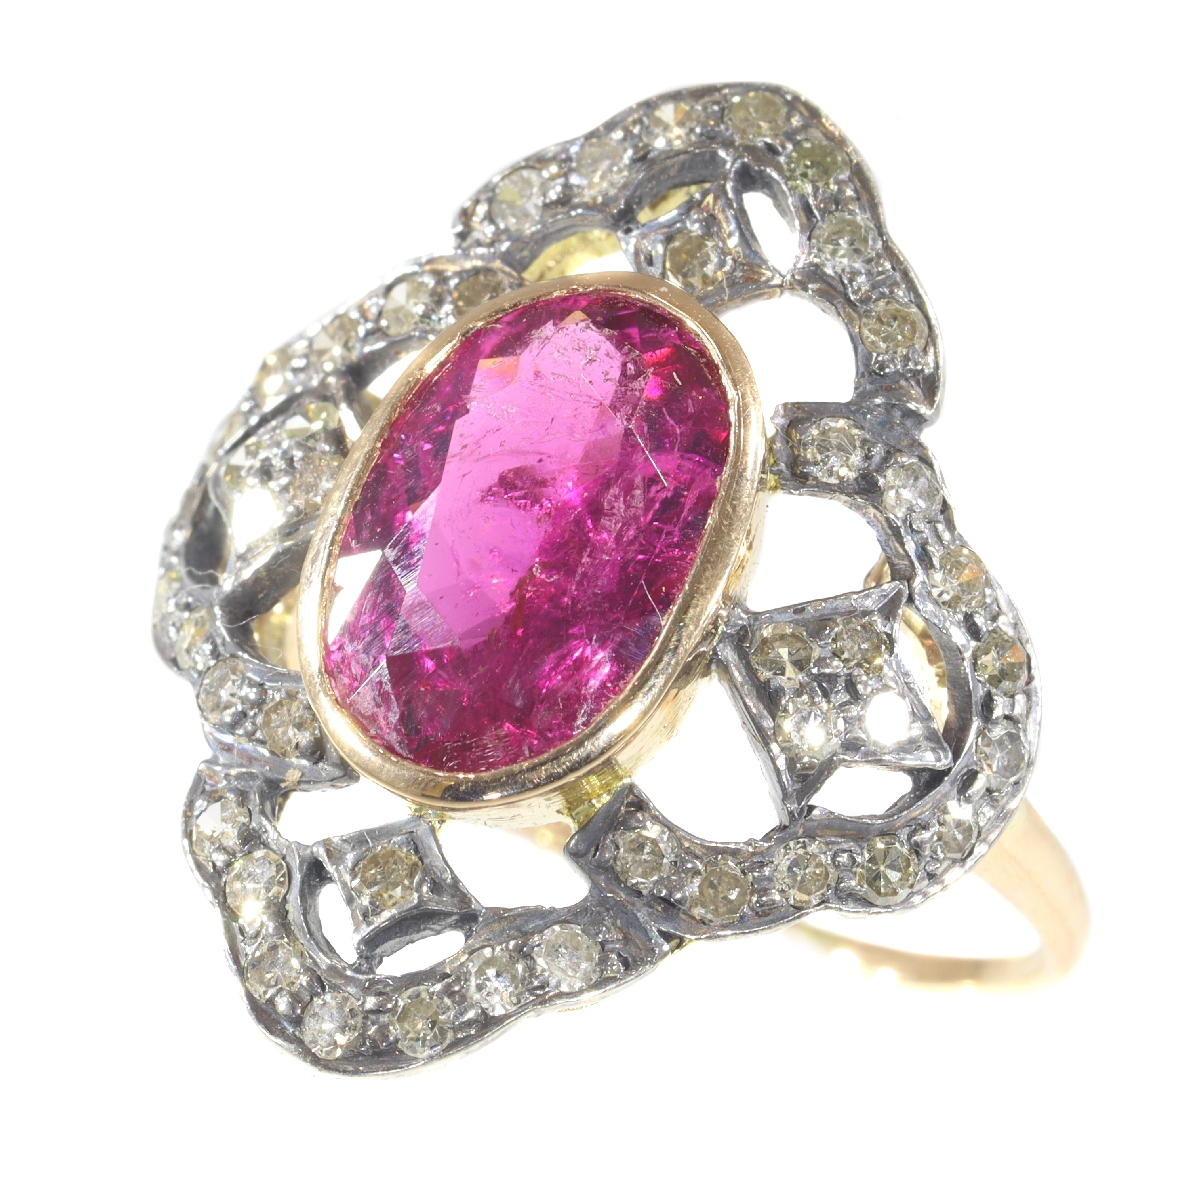 1930's Splendour: A Vintage Diamond and Rubelite Ring